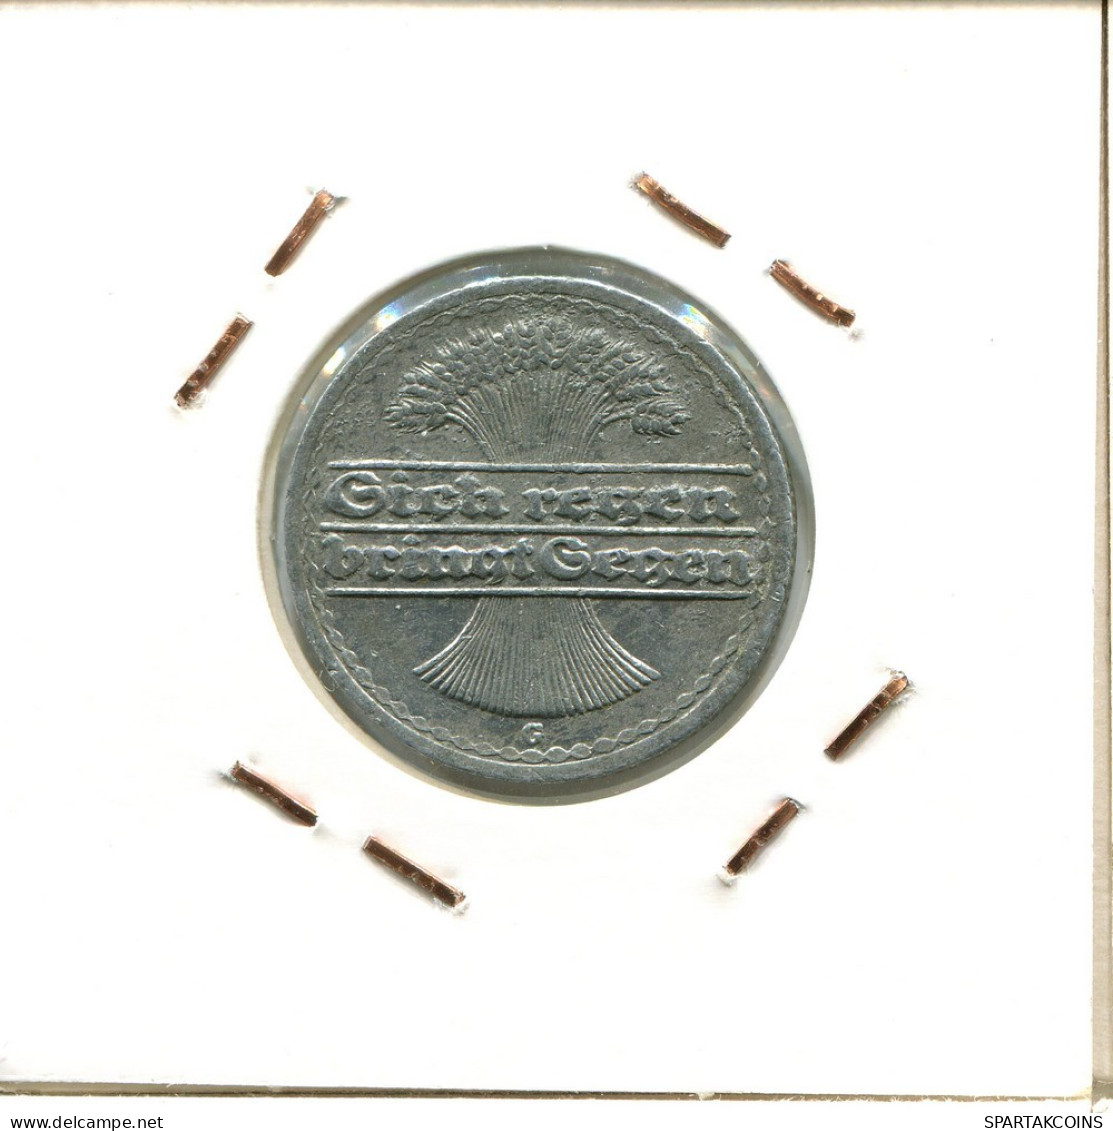 50 PFENNIG 1921 G ALEMANIA Moneda GERMANY #DB974.E.A - 50 Rentenpfennig & 50 Reichspfennig